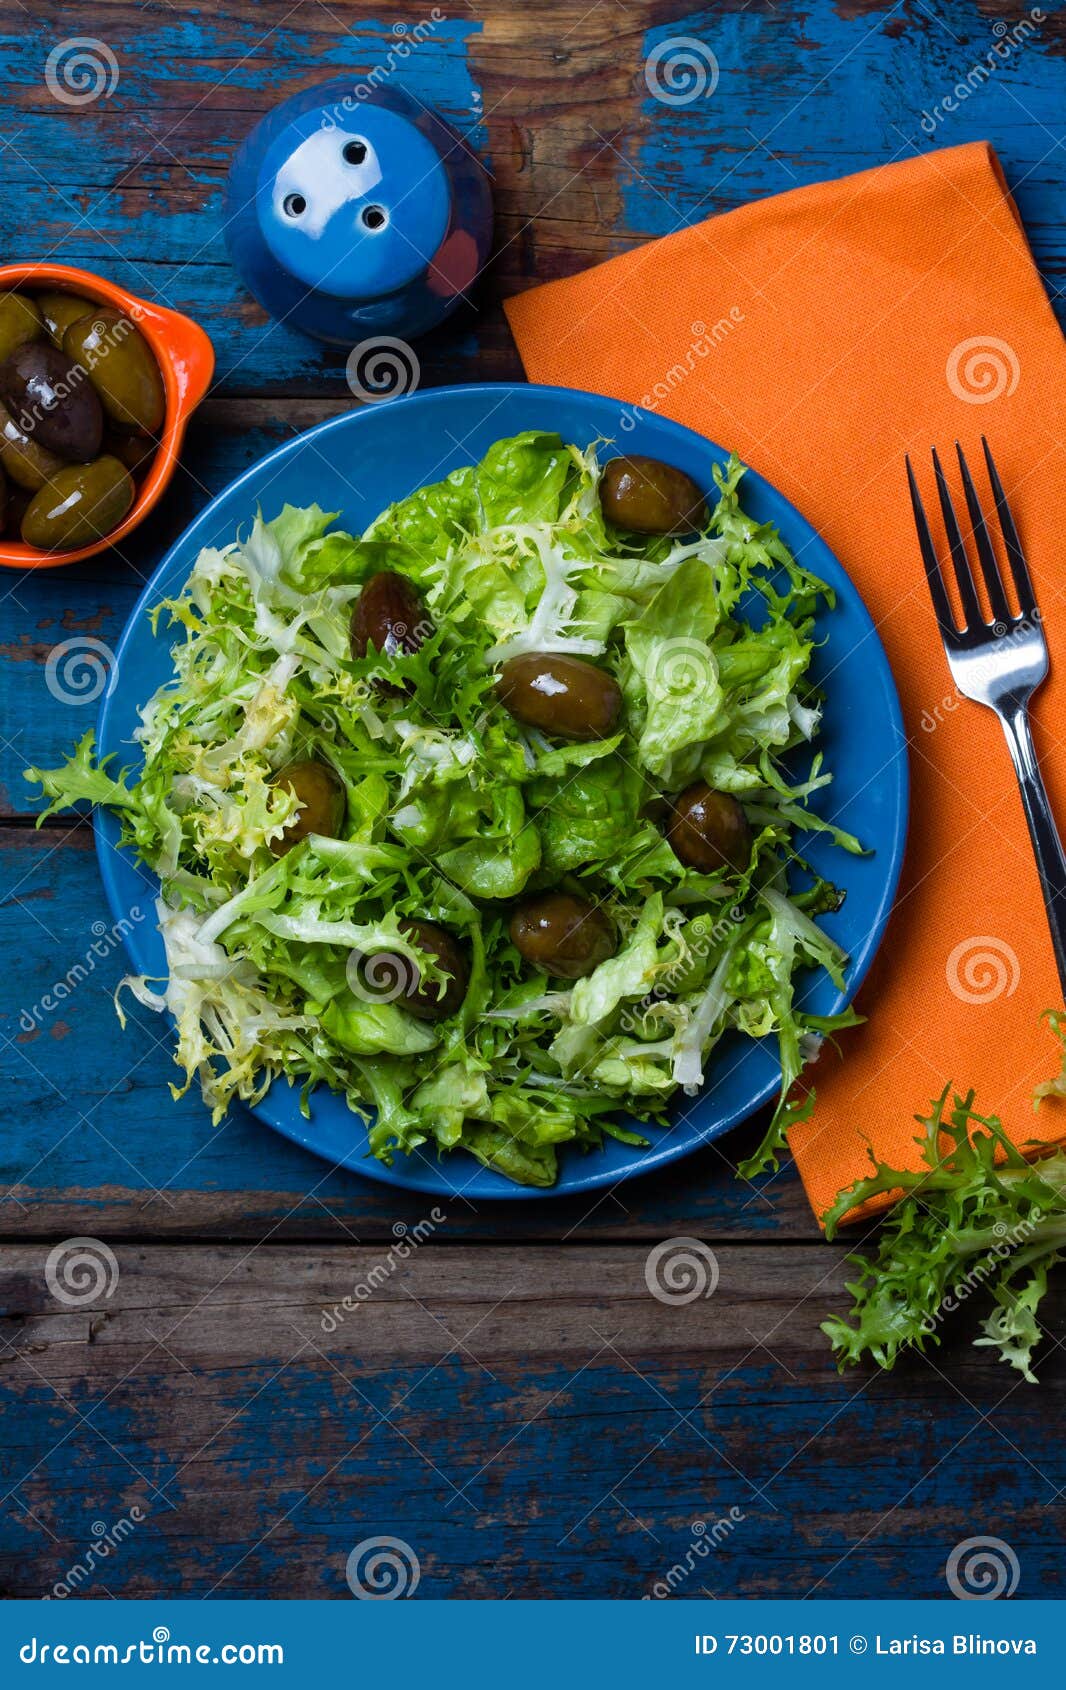 vegetarian salad with lettuce and olives. colorful blue orange background